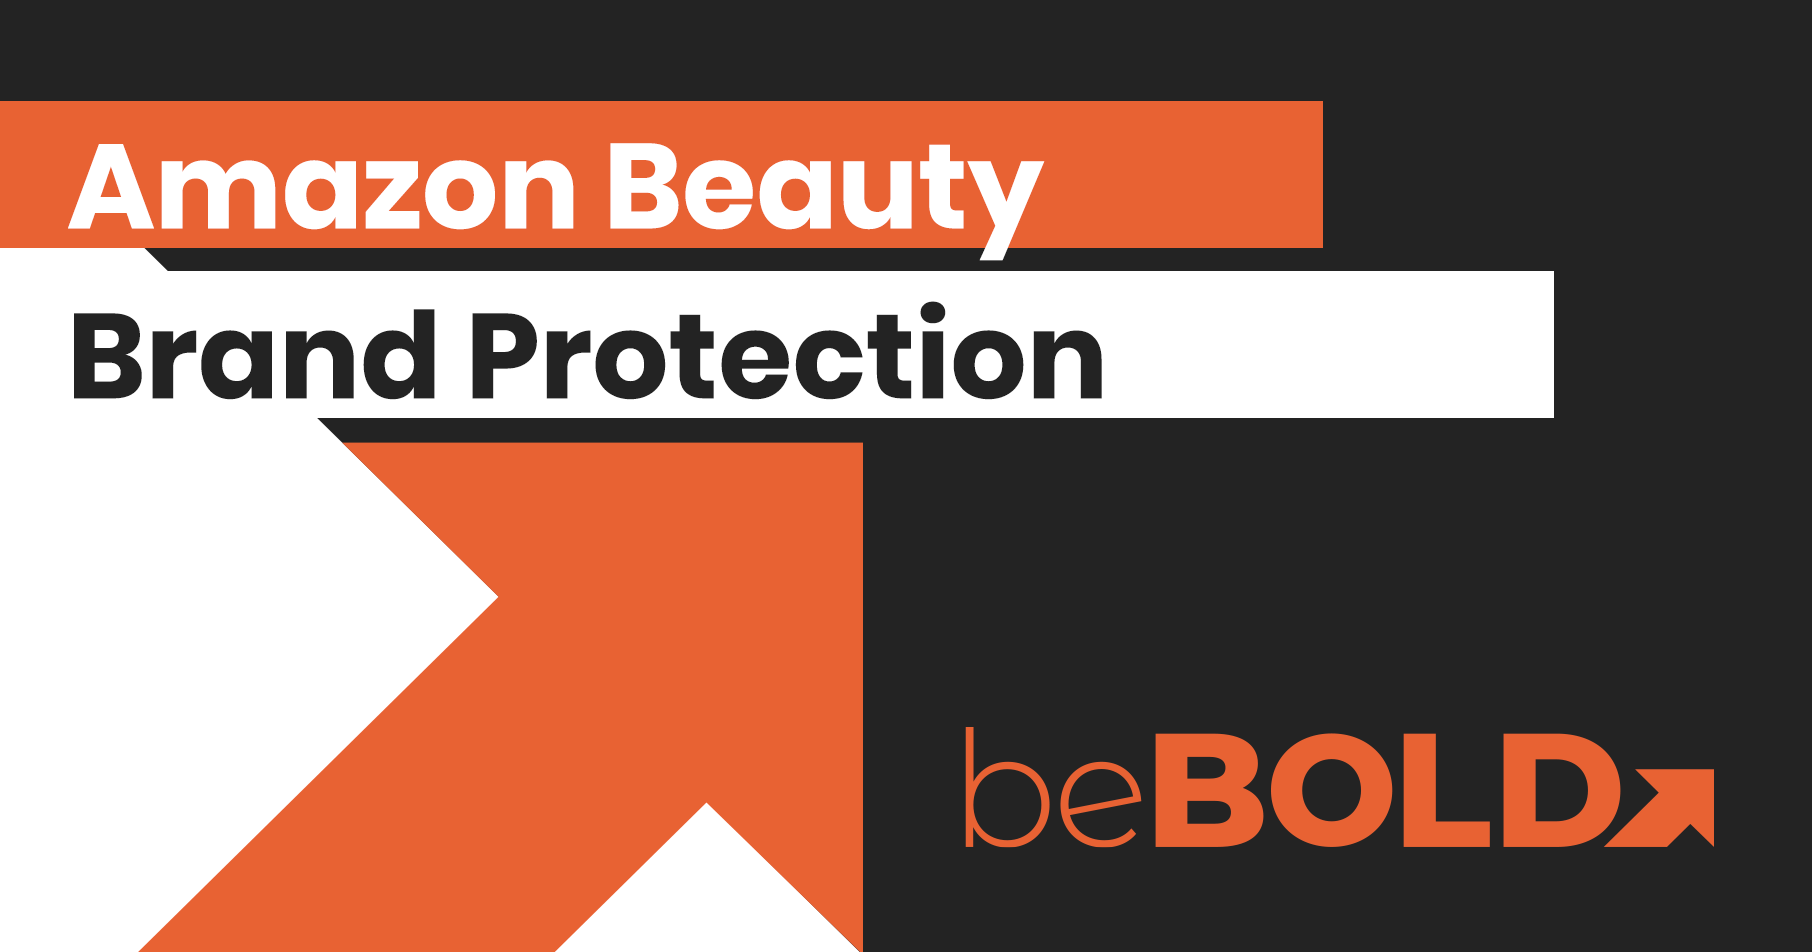 Amazon Beauty Brand Protection